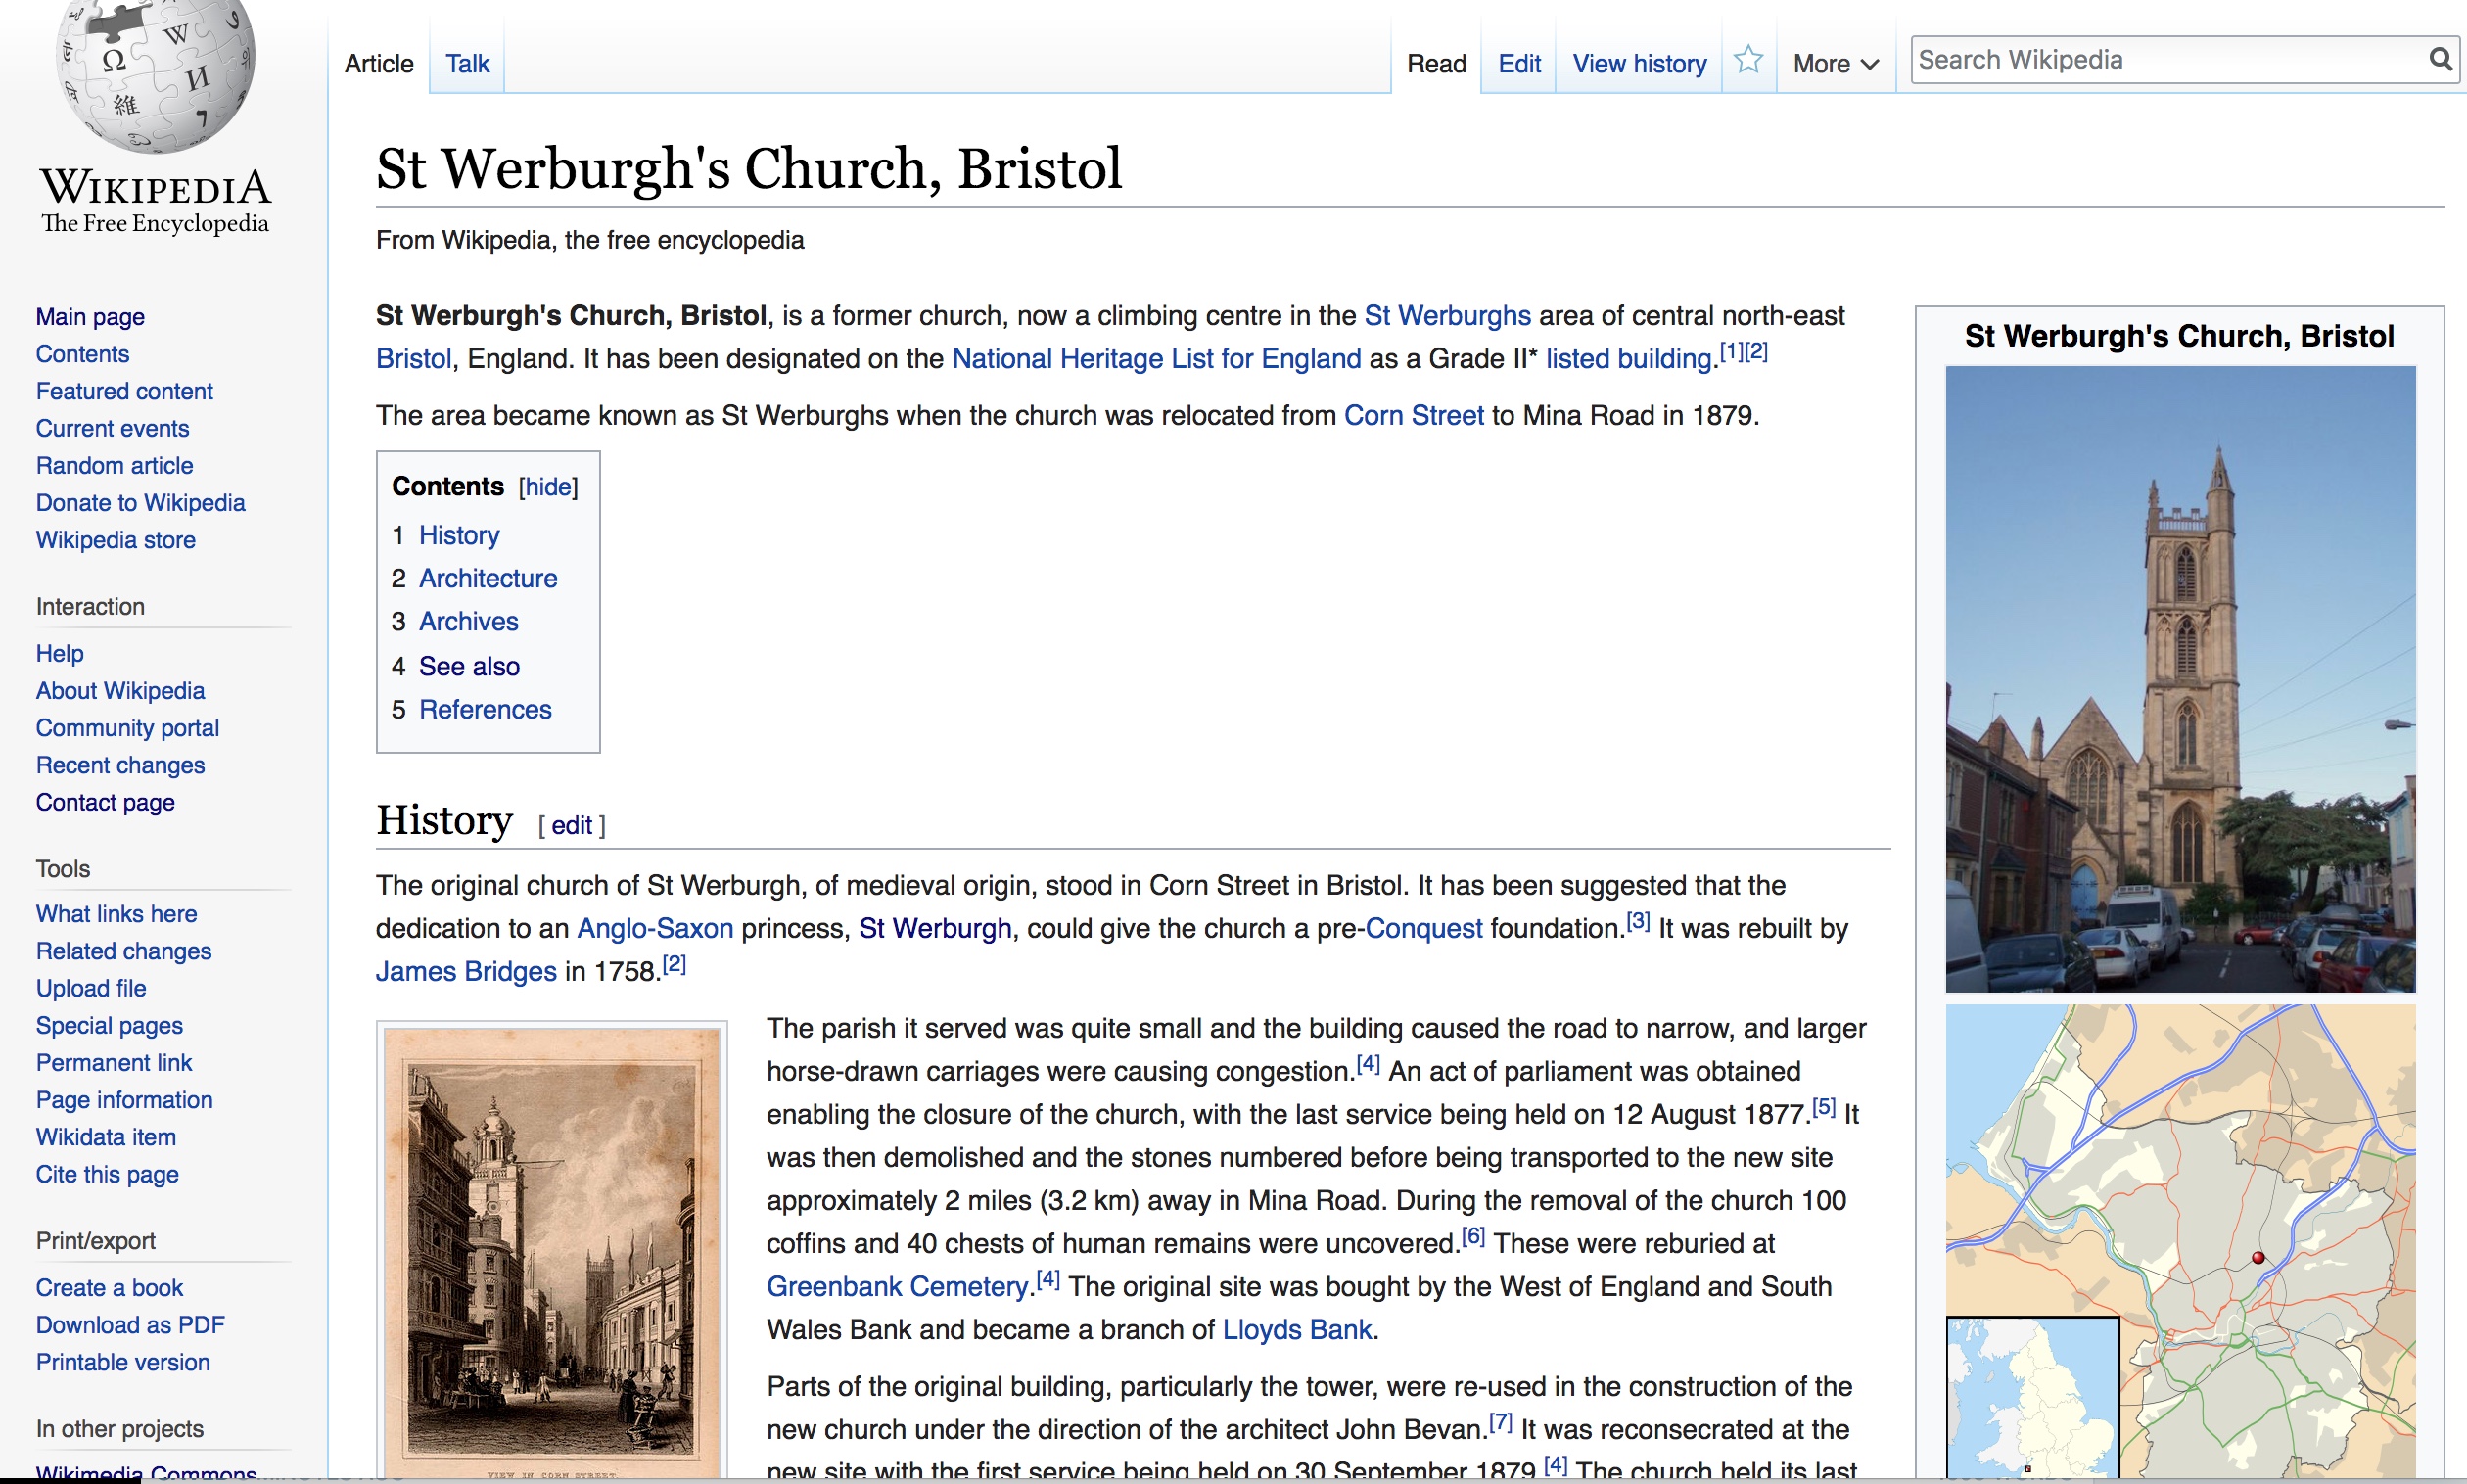 st werbugh's church wiki